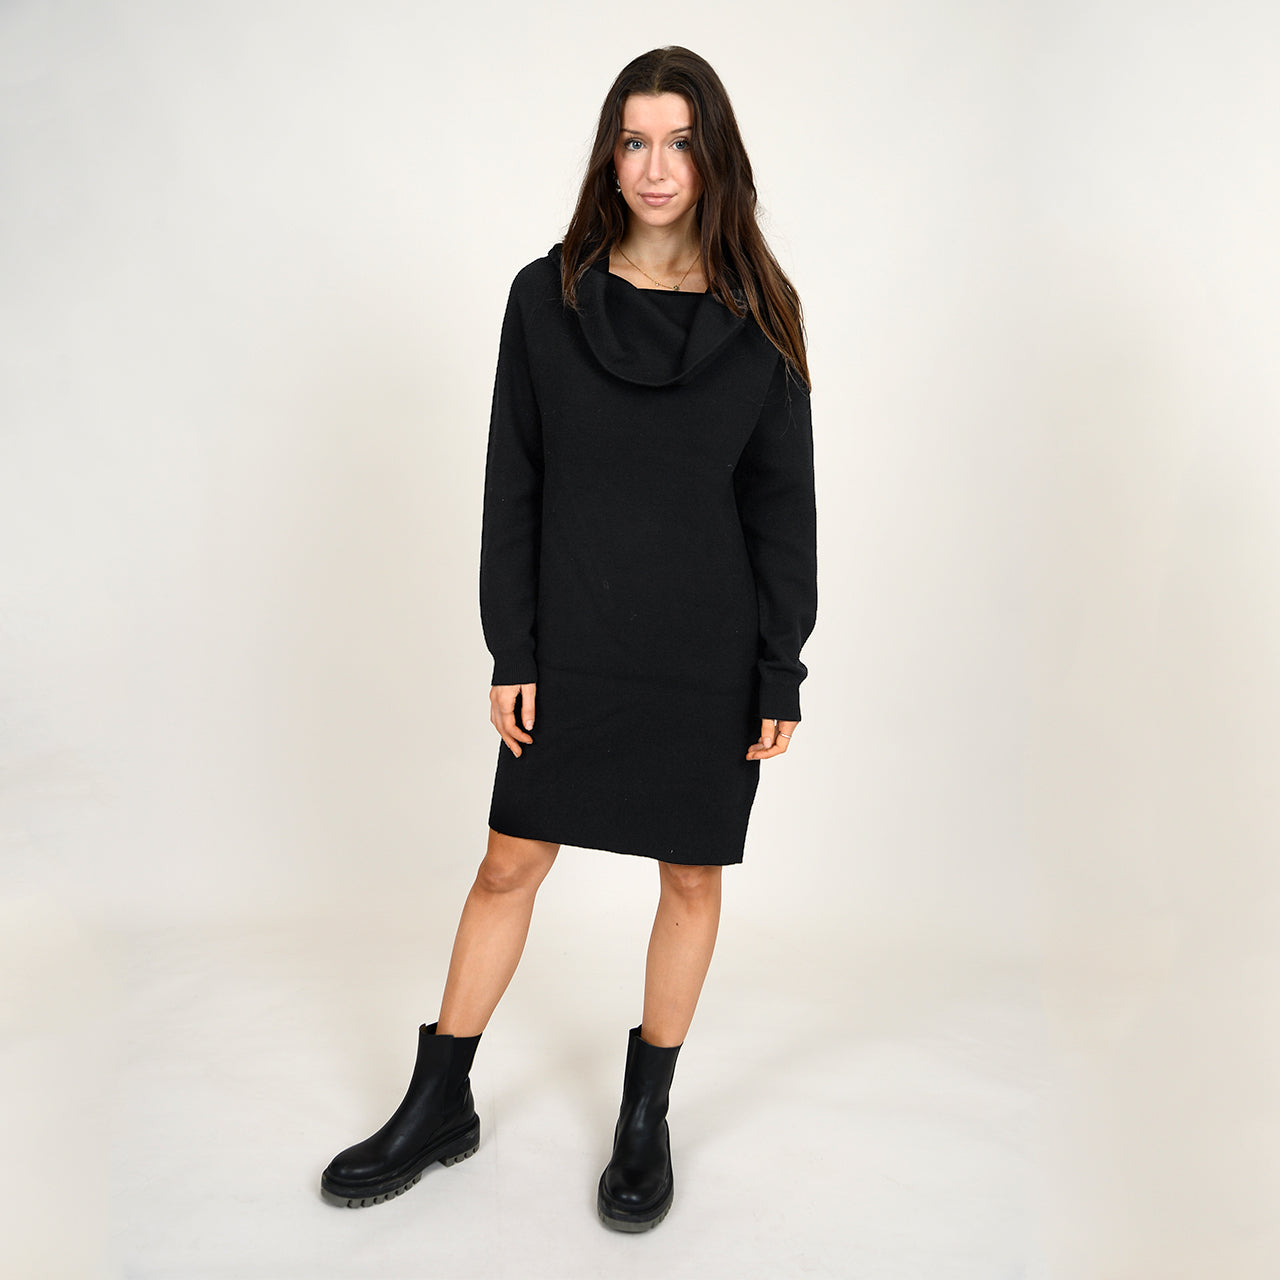 Black Sweater Dress by R&K Originals Size 6 – La Guanaquita's Closet